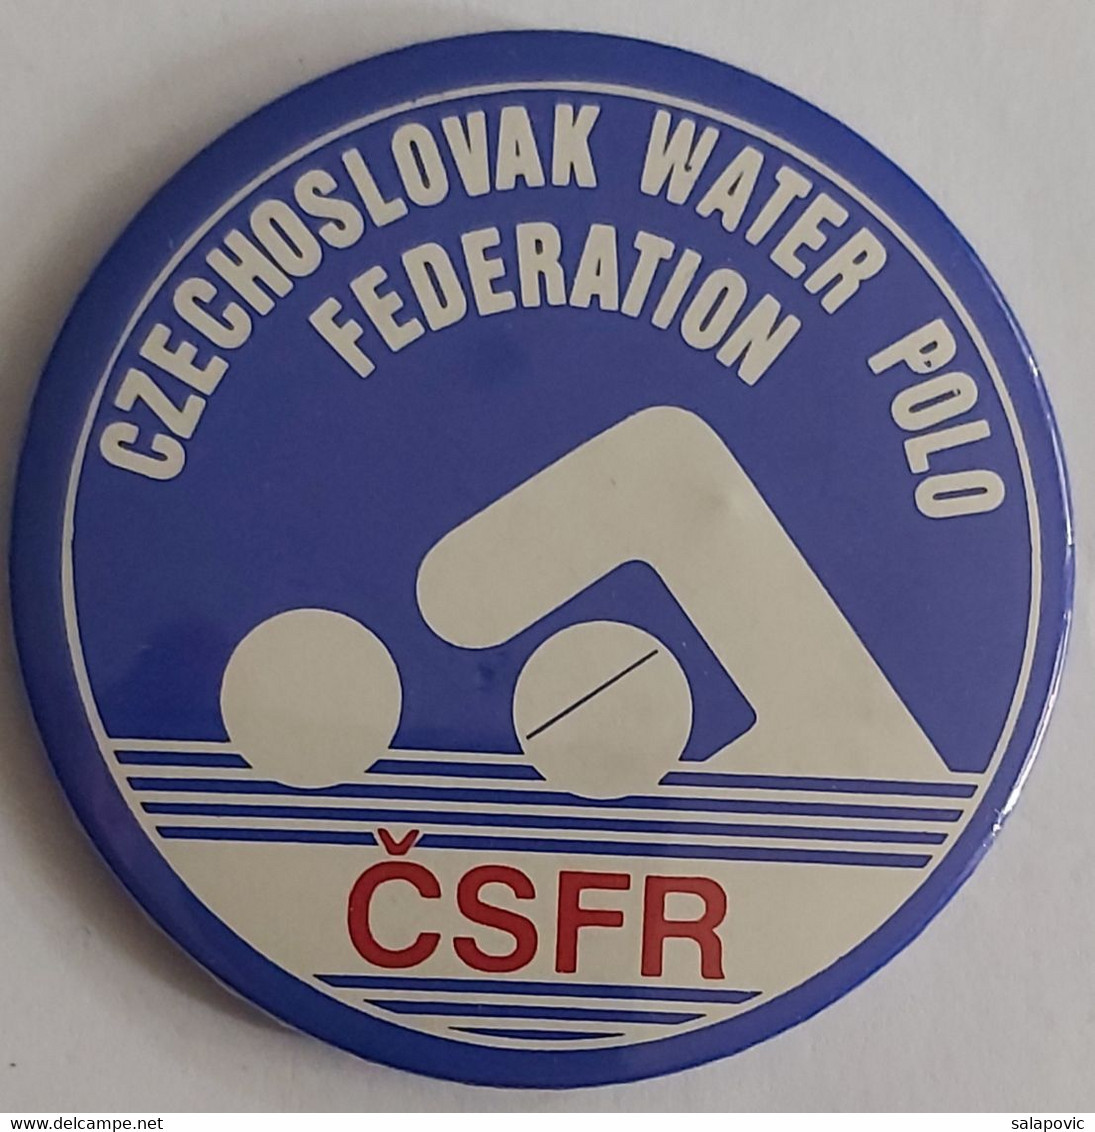 CZECHOSLOVAK WATER POLO FEDERATION Badge  PLAST - Fencing